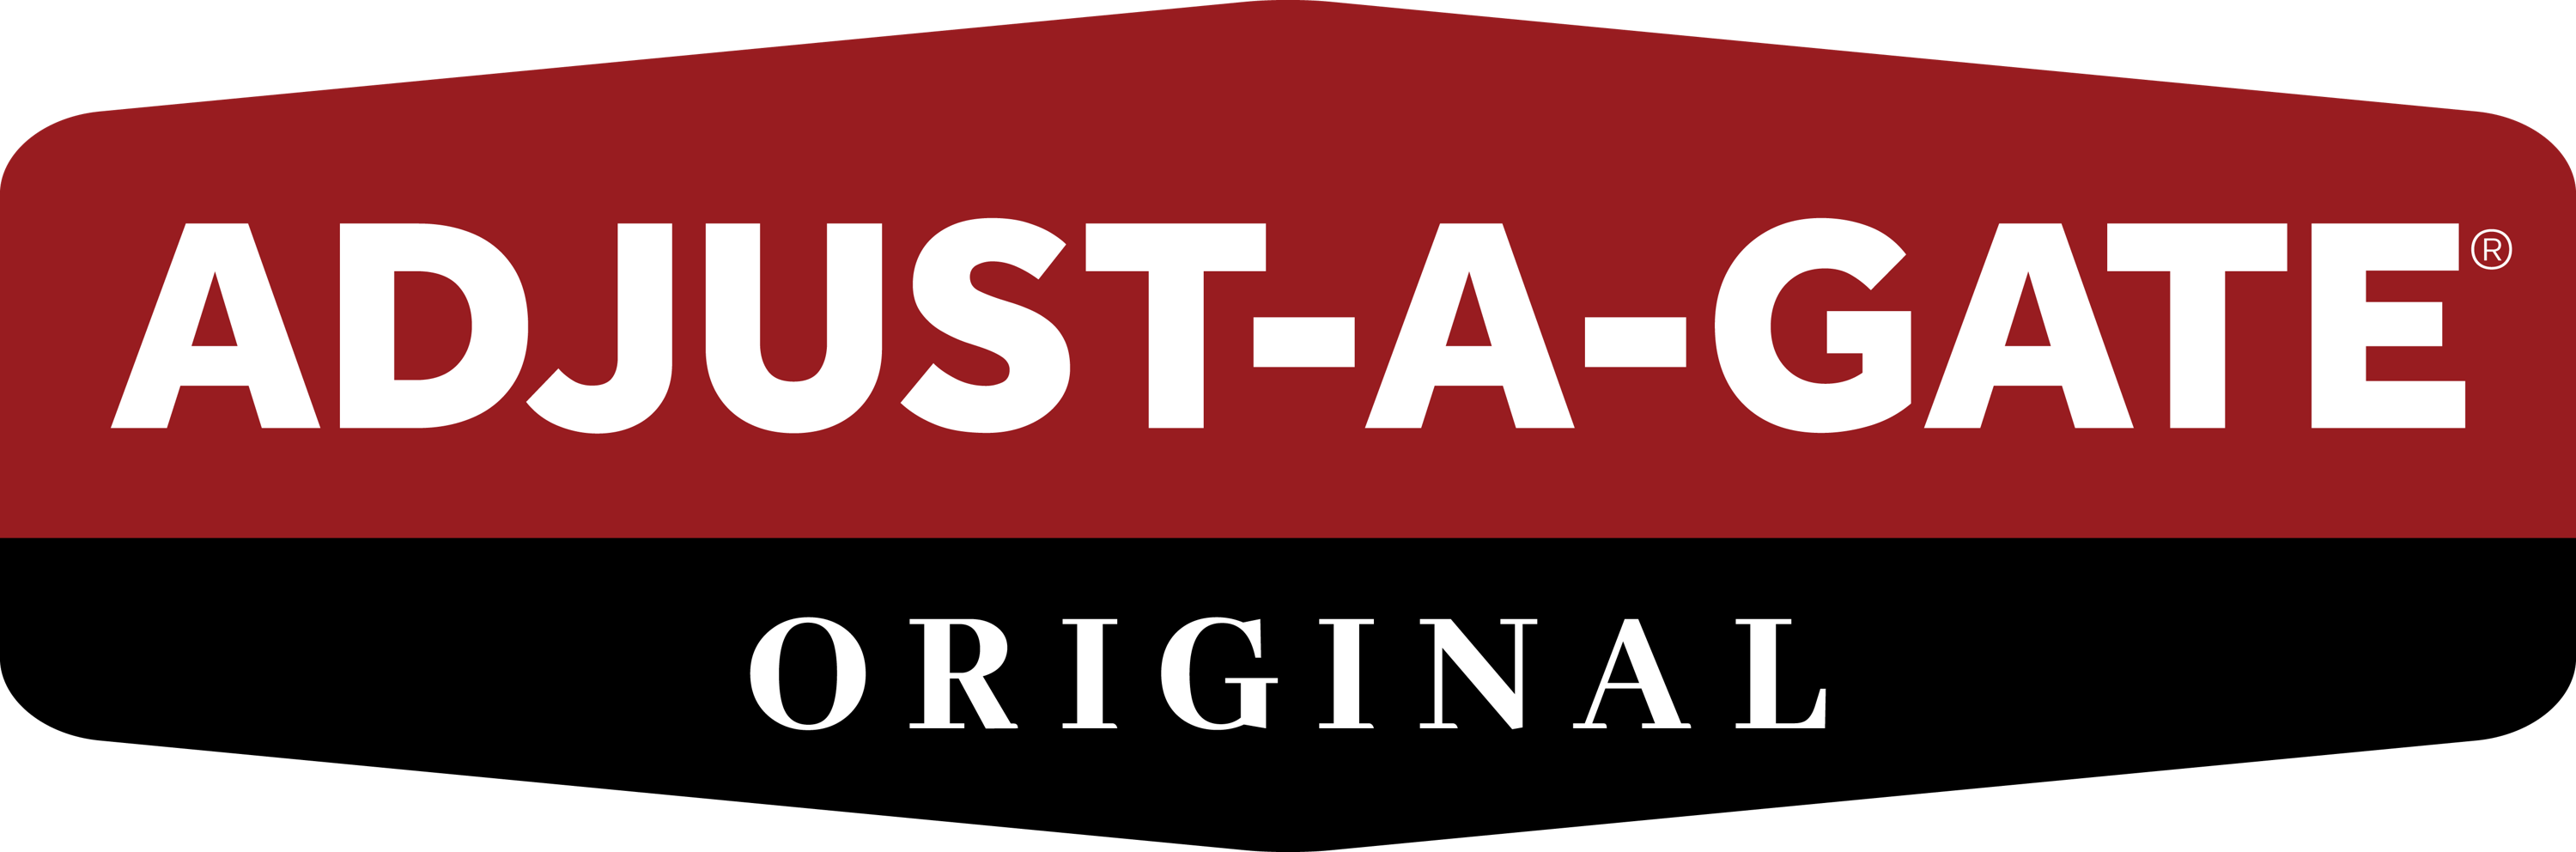 Adjust-A-Gate® logo